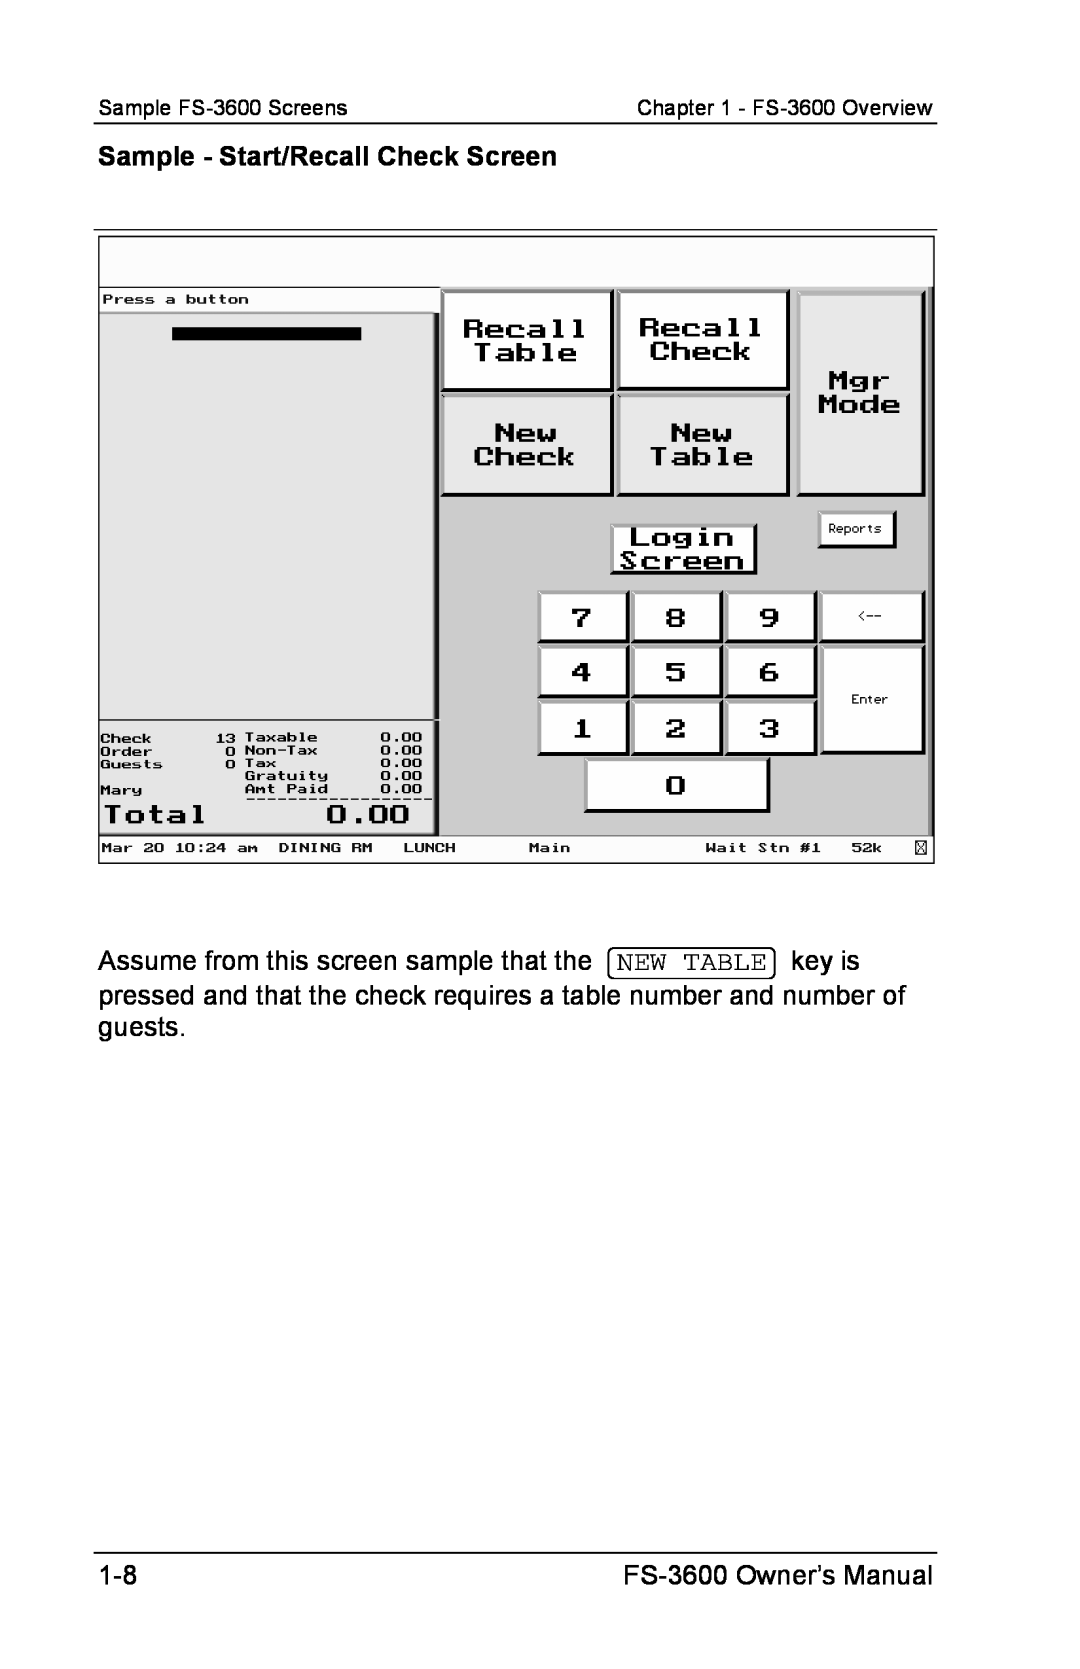 Toshiba owner manual Sample - Start/Recall Check Screen, FS-3600Owner’s Manual, Sample FS-3600Screens, FS-3600Overview 